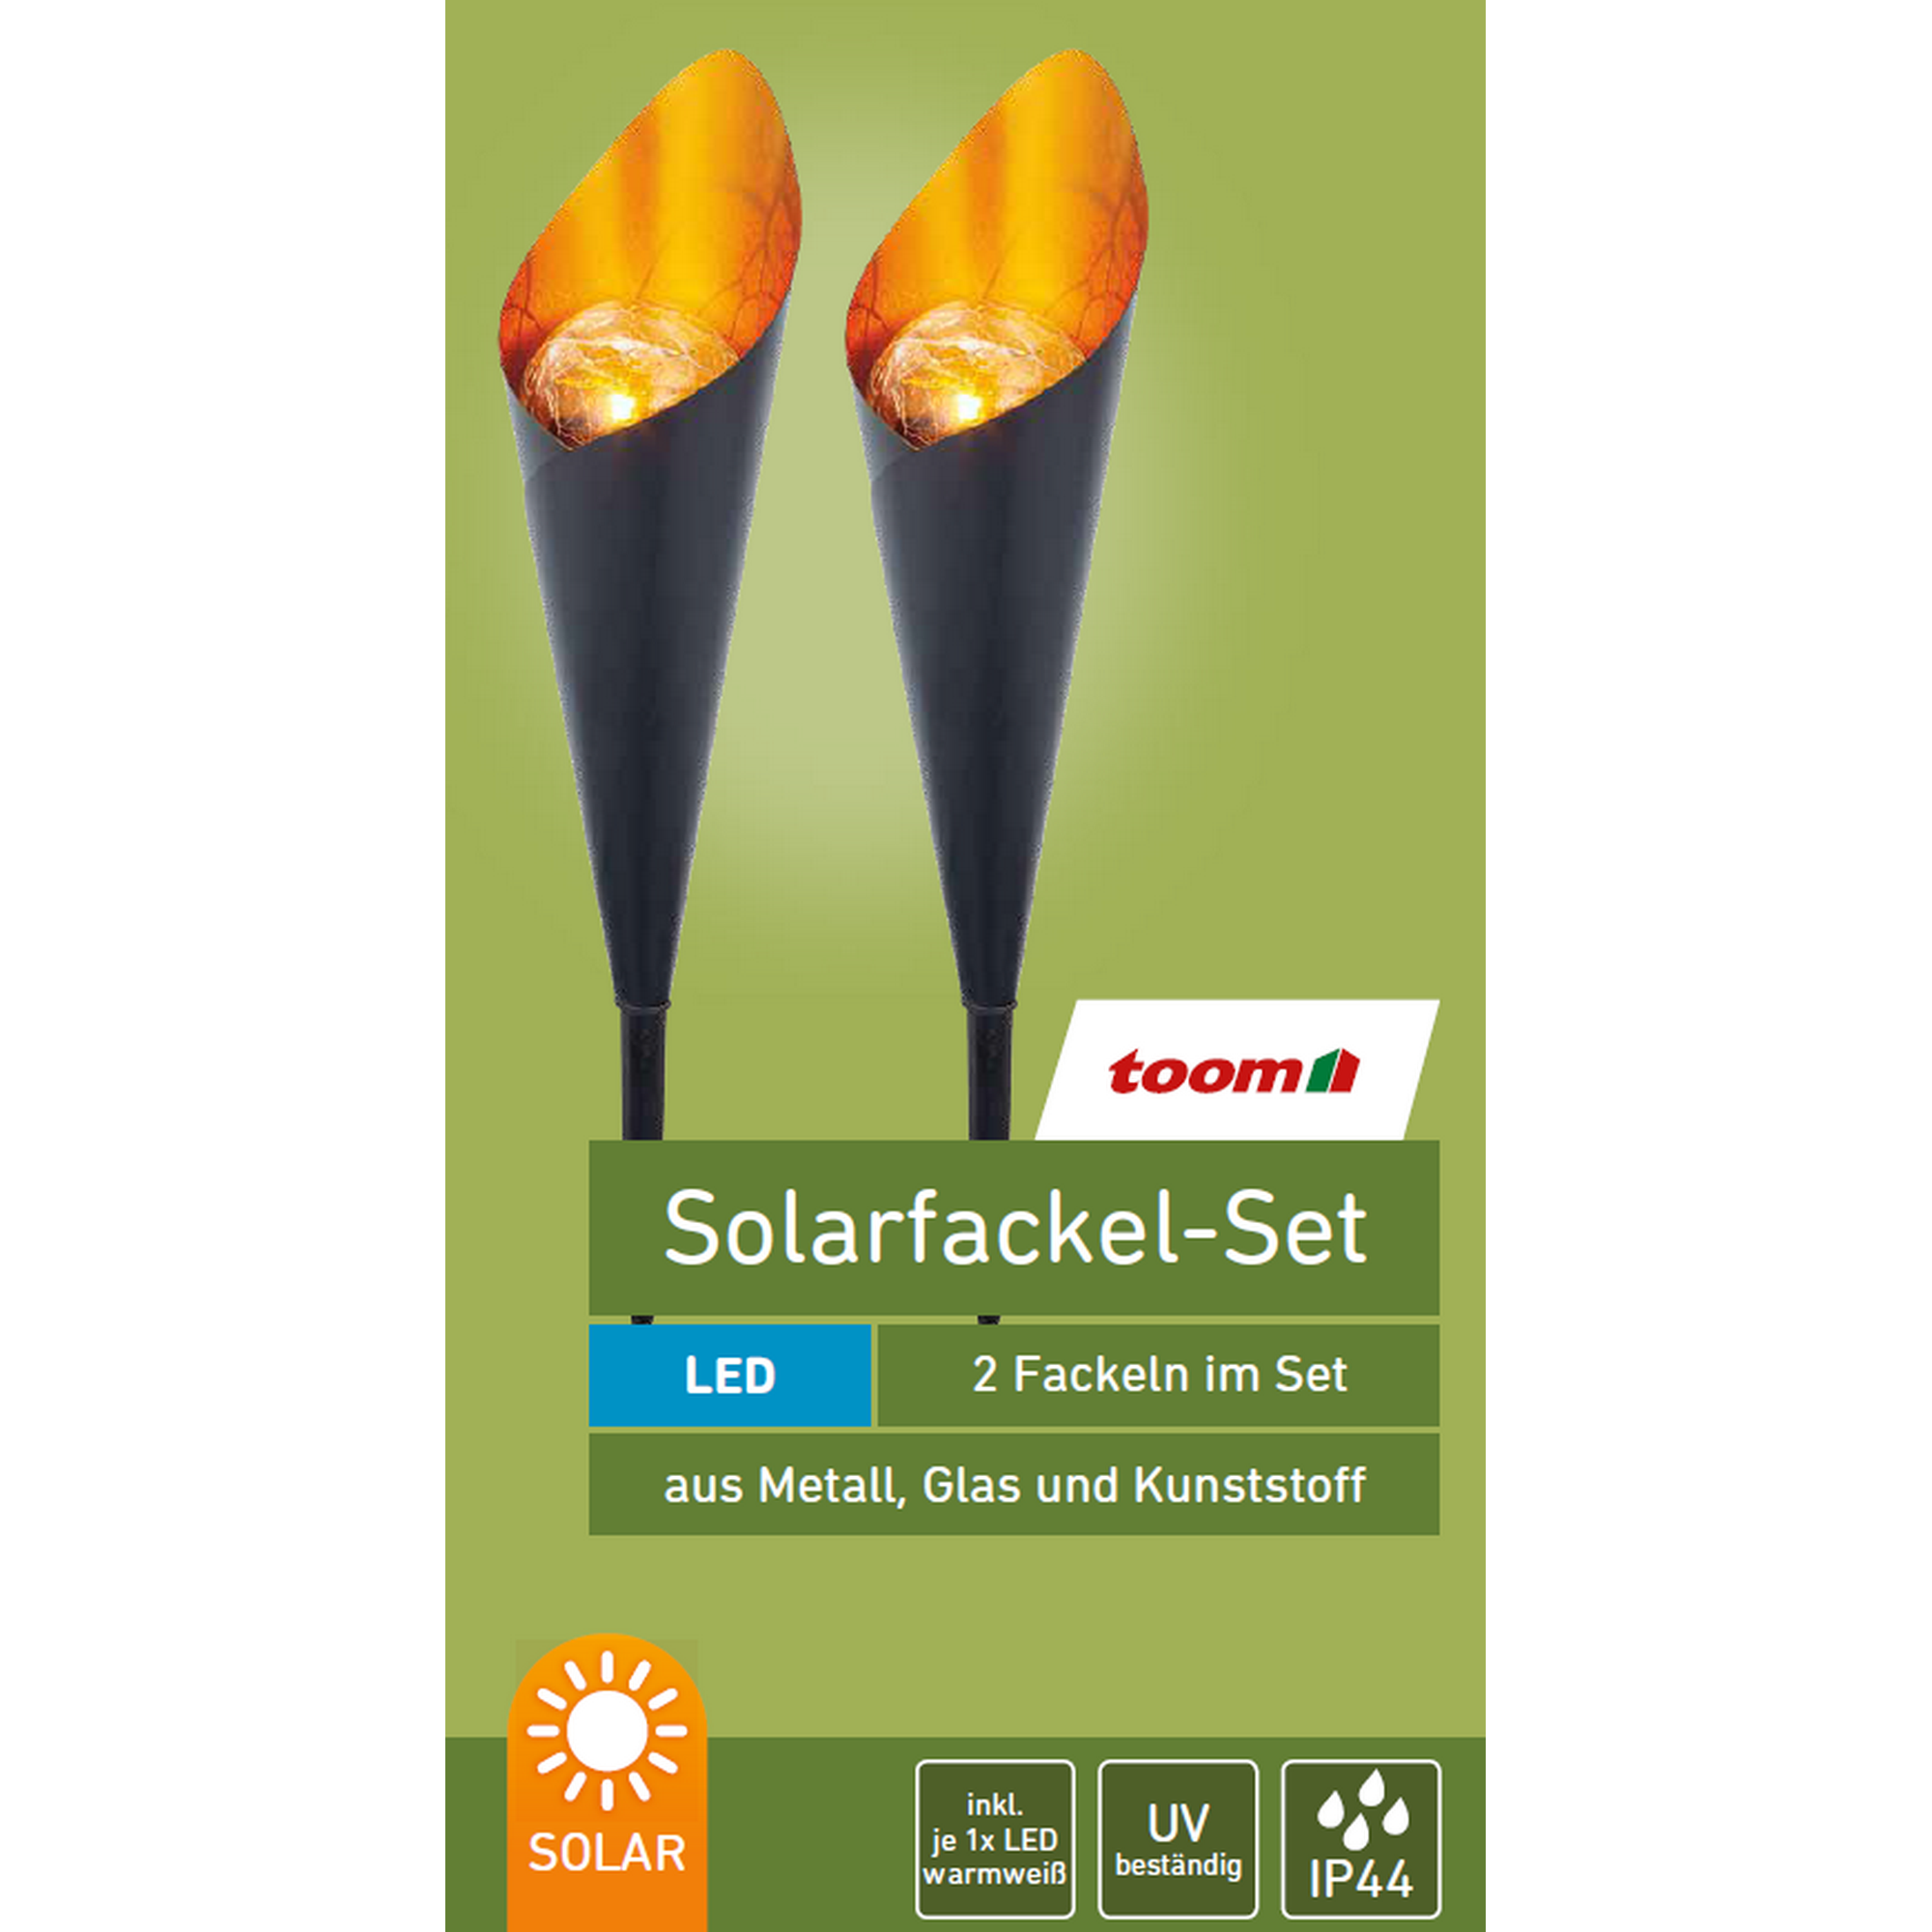 Solarfackel-Set anthrazit/gold 7,5 x 25,5 cm 2-teilig + product picture